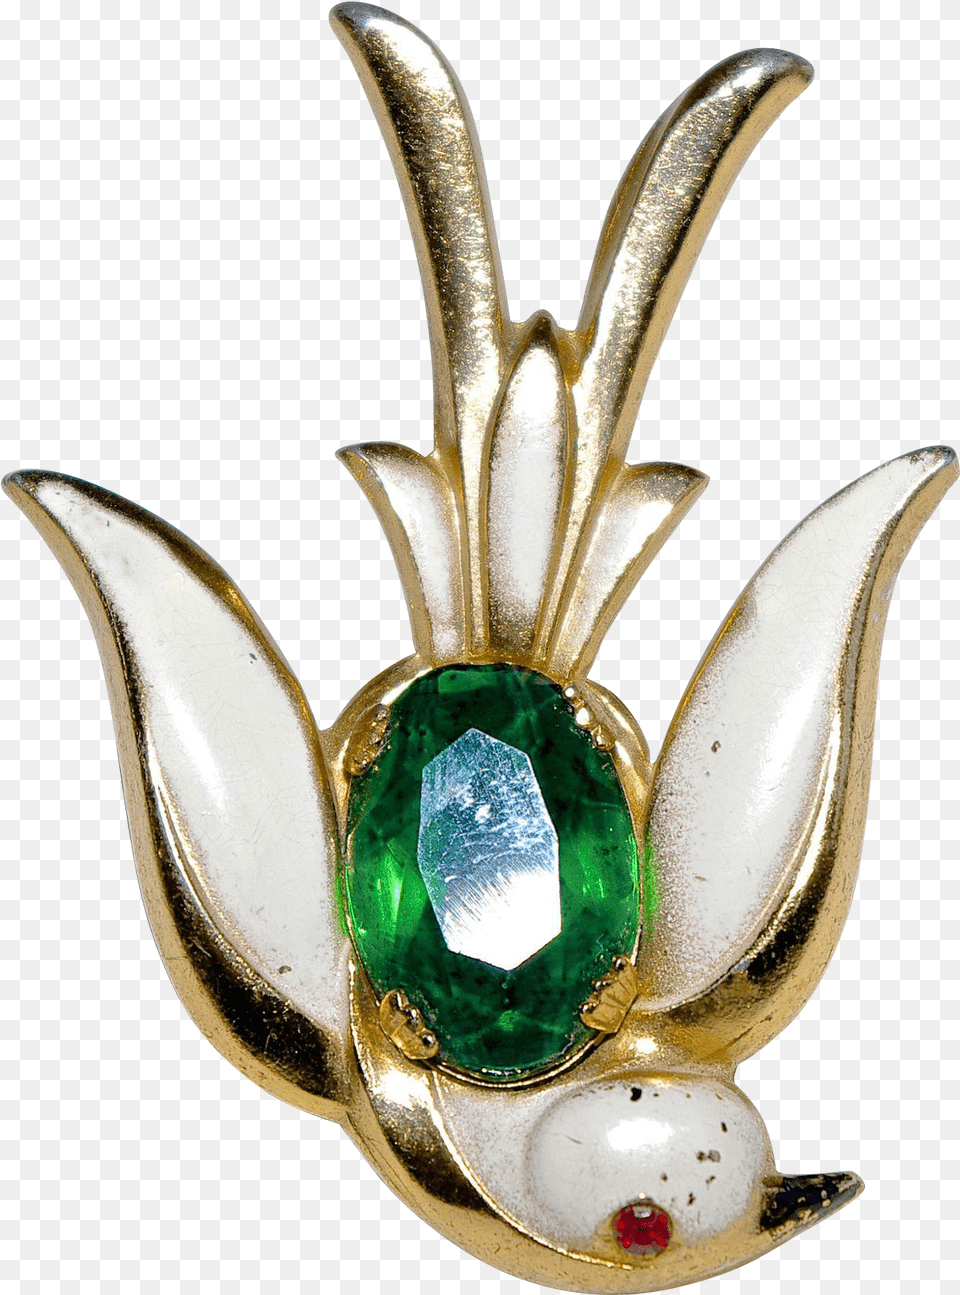 Crystal, Accessories, Jewelry, Gemstone, Locket Png Image